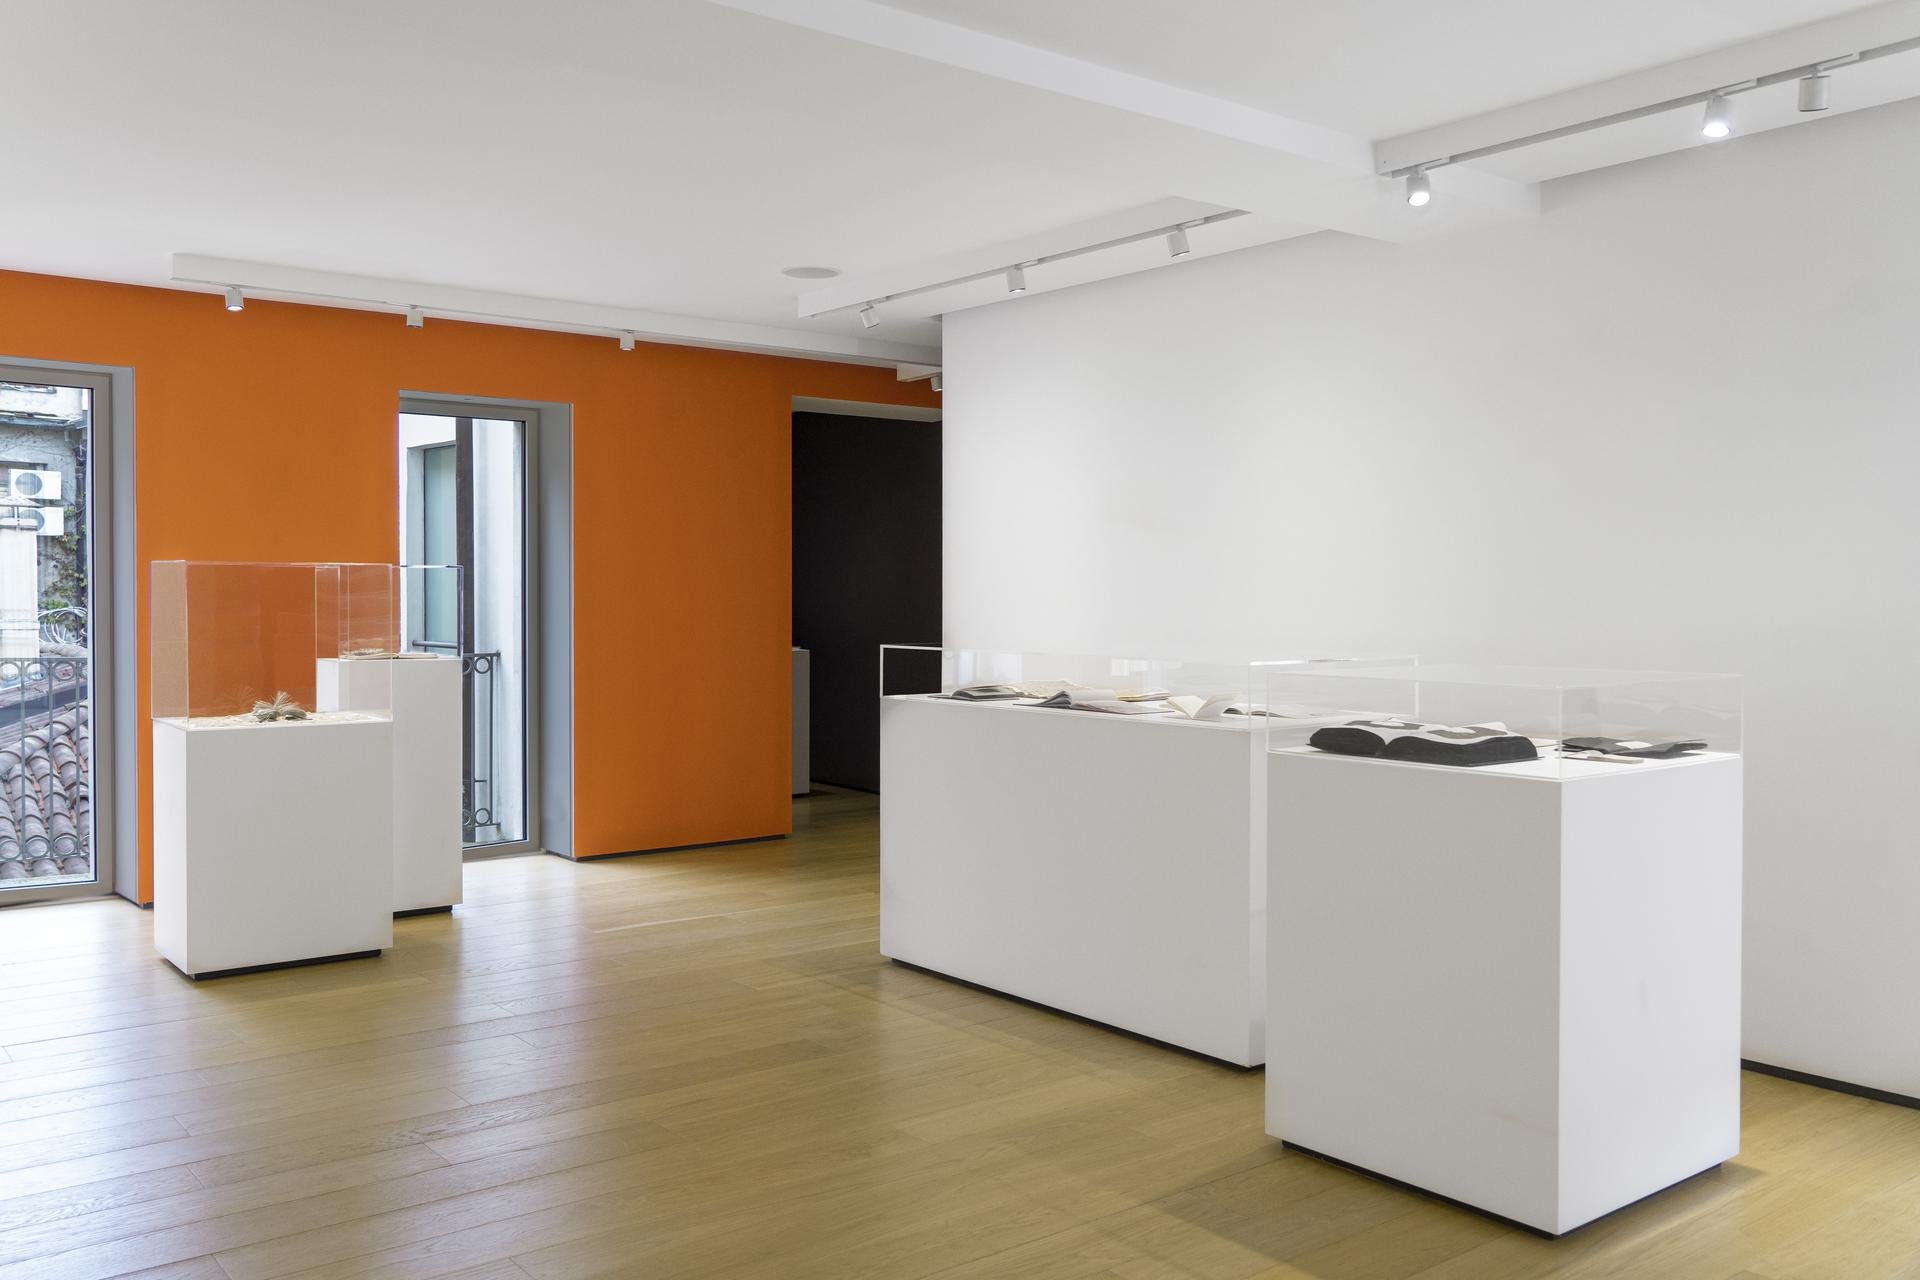 Installation view, Opus liber, BUILDING TERZO PIANO, Milano, ph. Simone Panzeri 